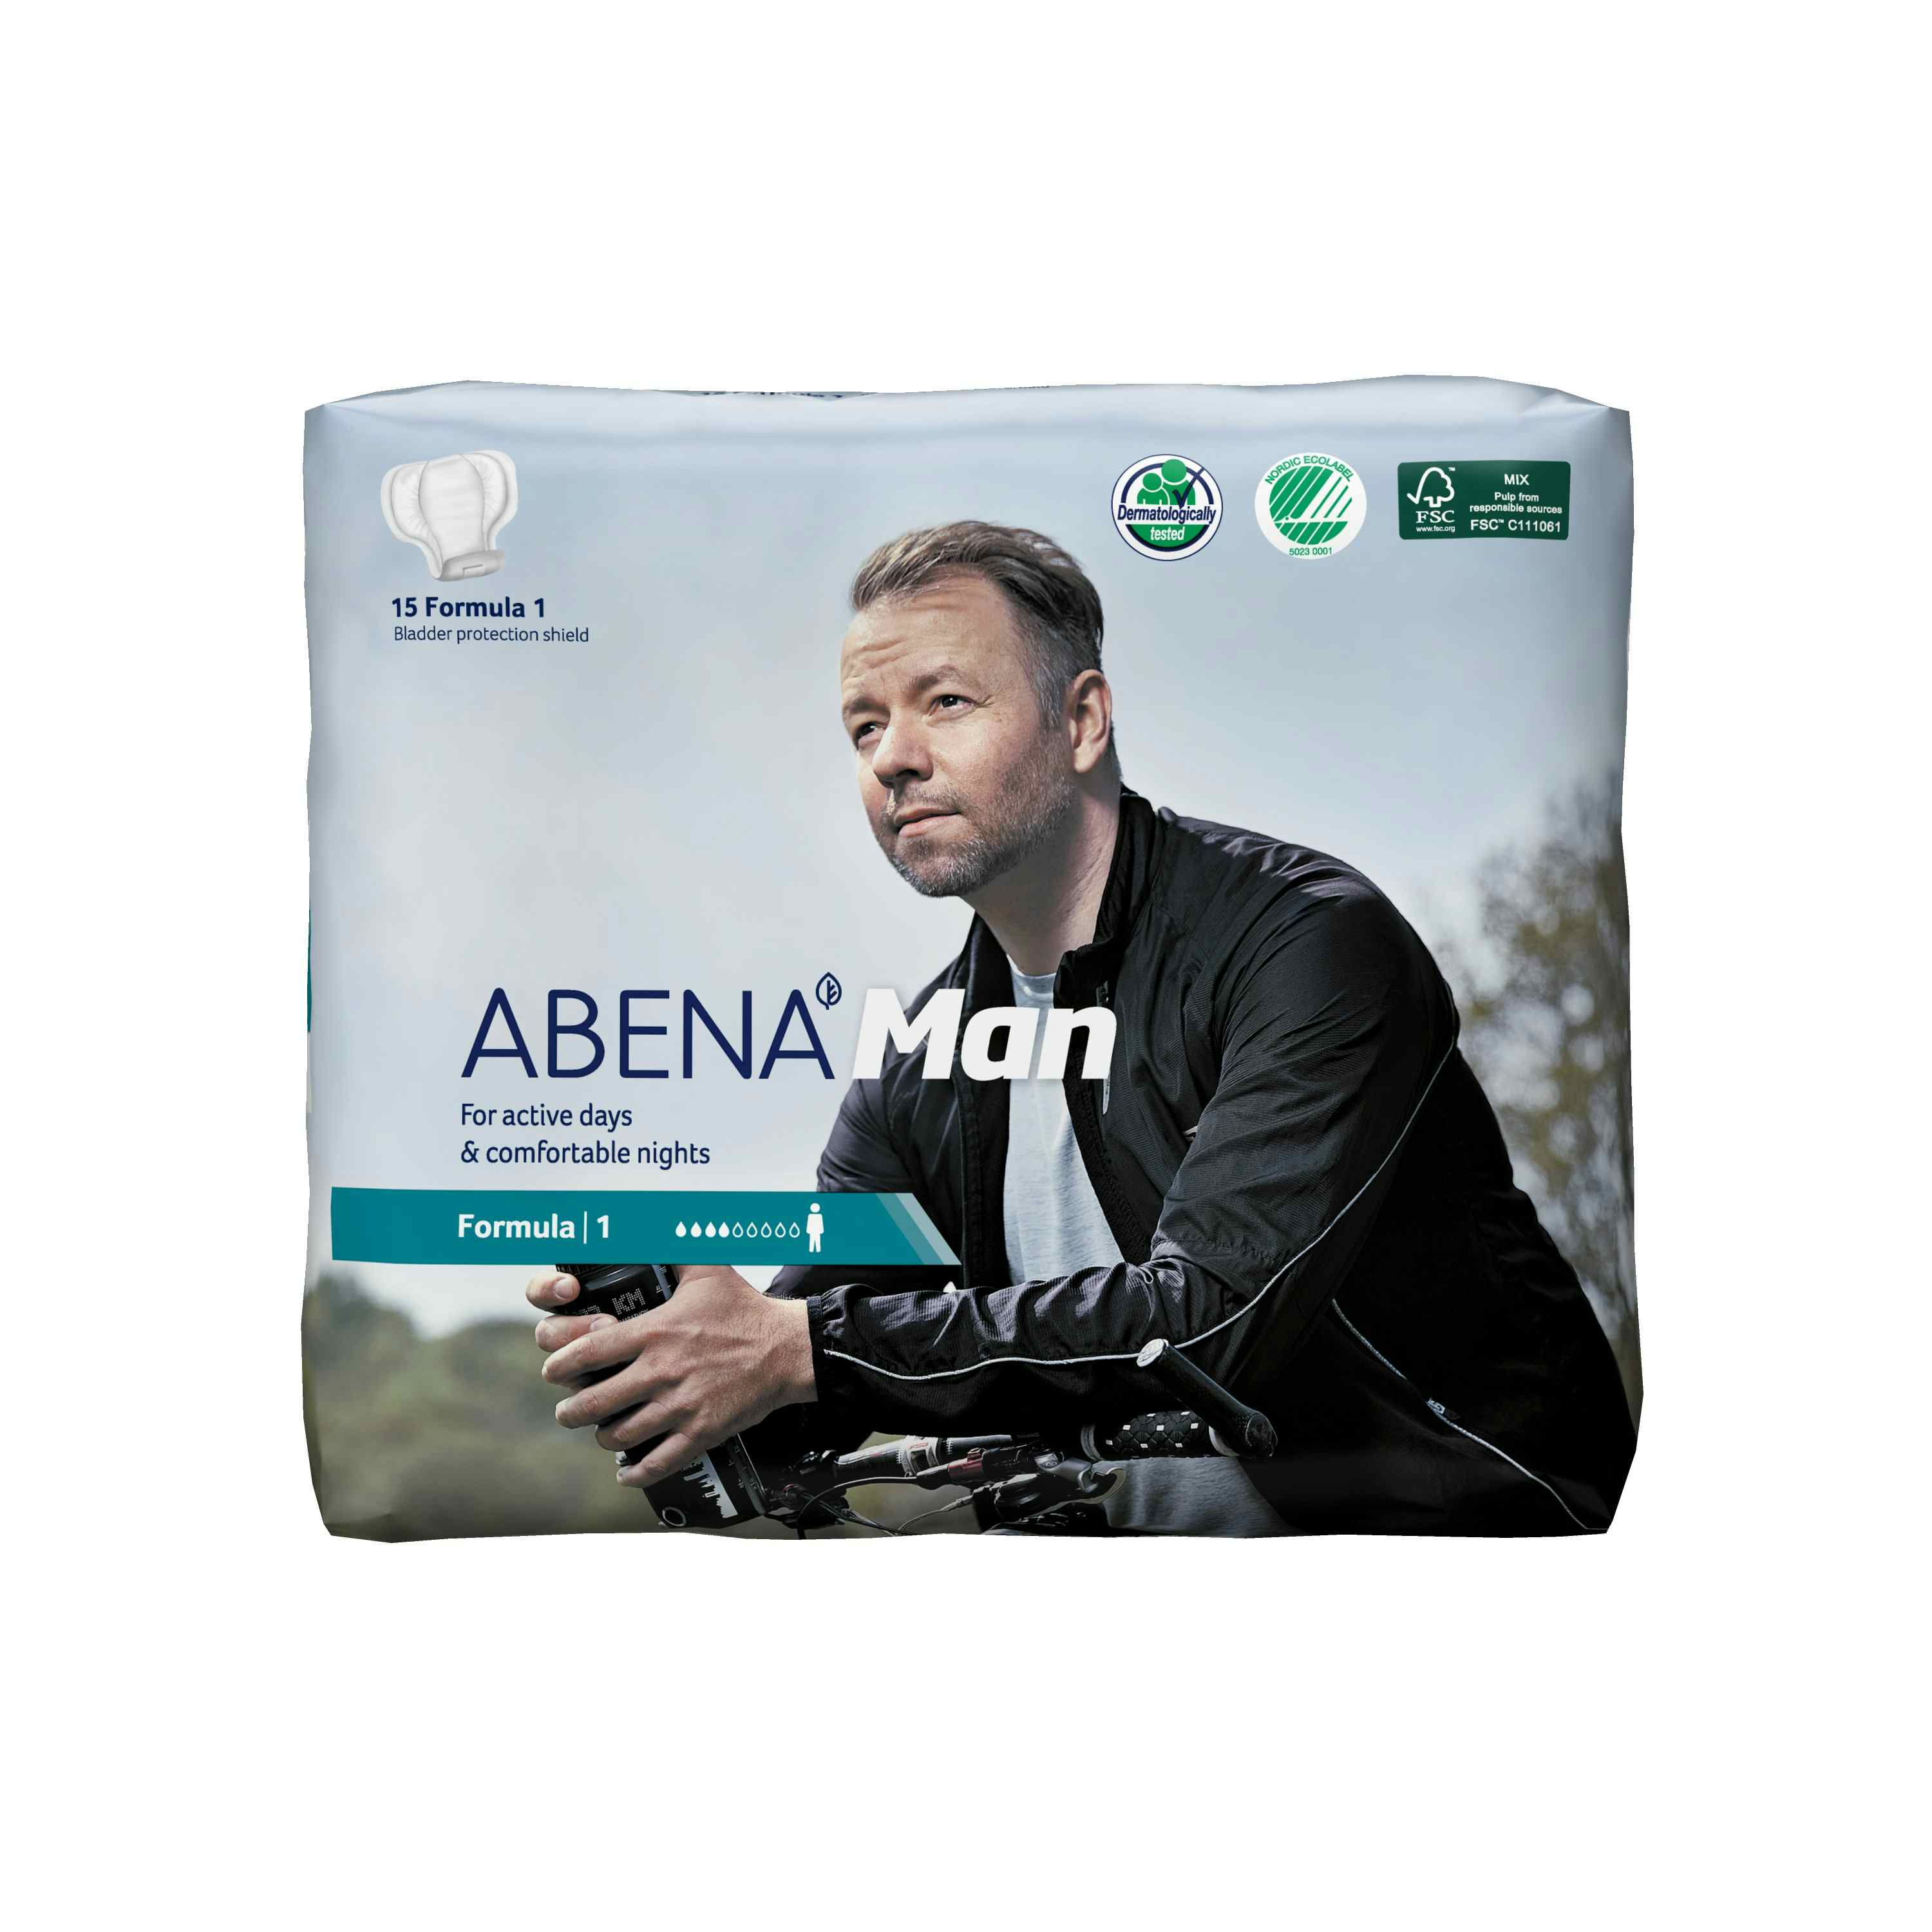  Abena-Man Adult Male Disposable Bladder Control Pad, Light Absorbency, 1000017162, Formula 1 (11") - Bag of 15